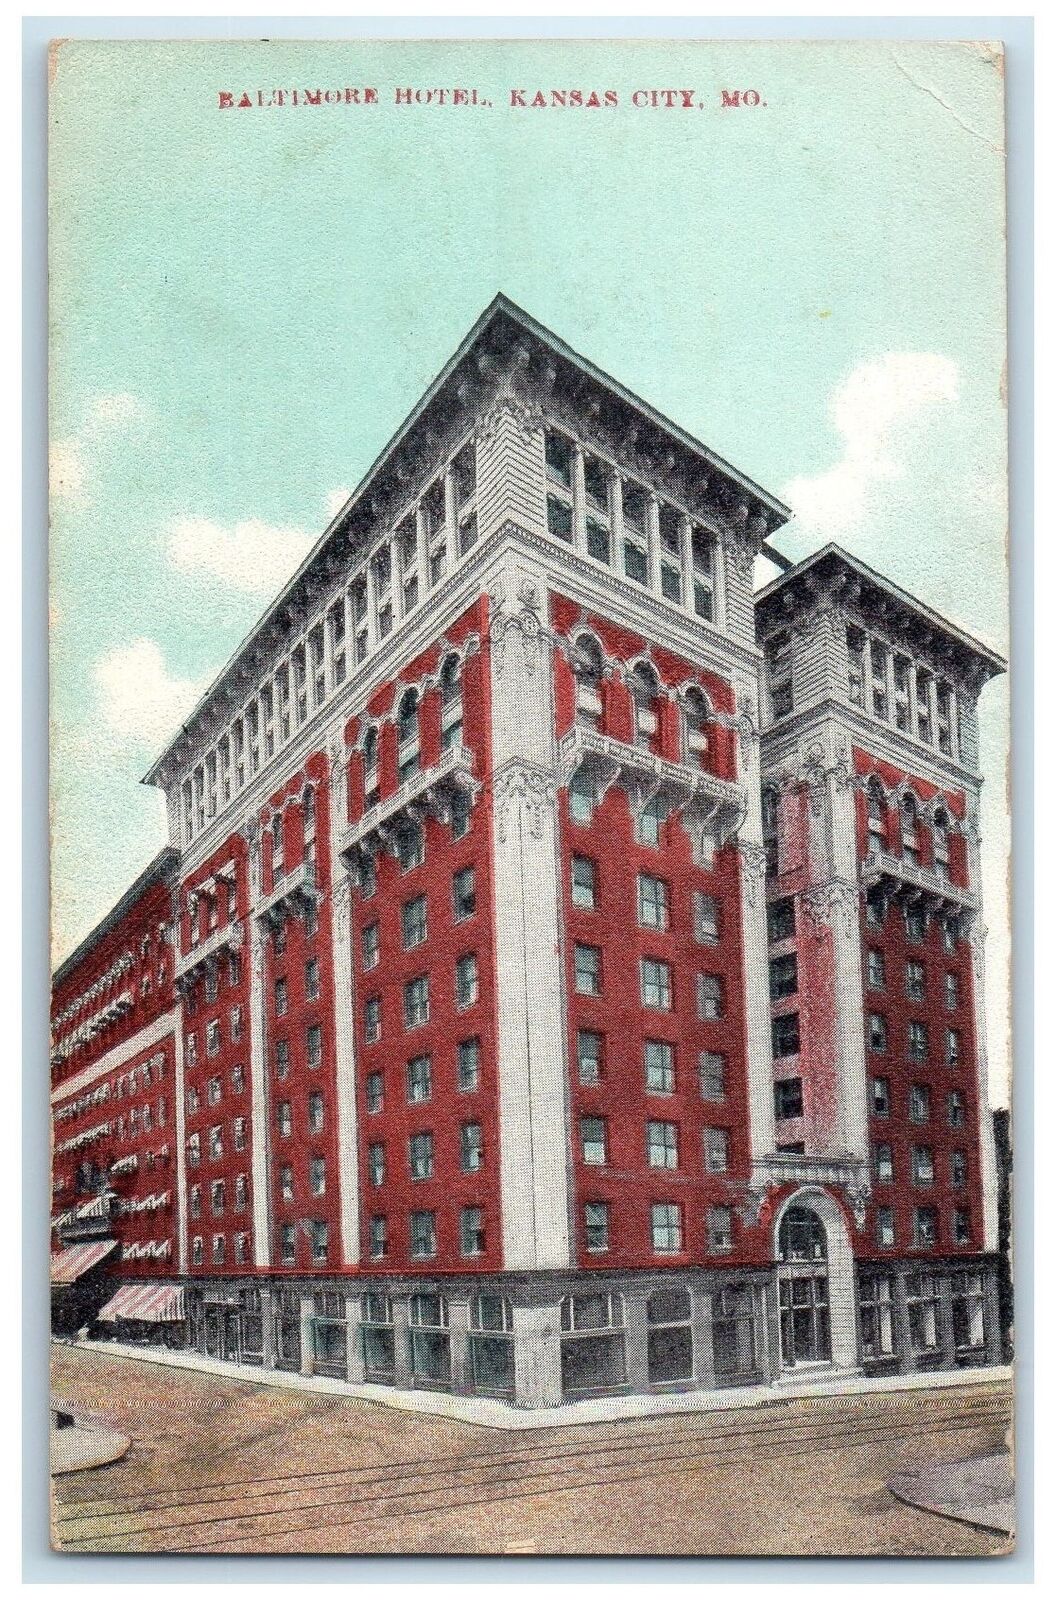 1911 Baltimore Hotel & Restaurant Building View Kansas City Missouri MO Postcard